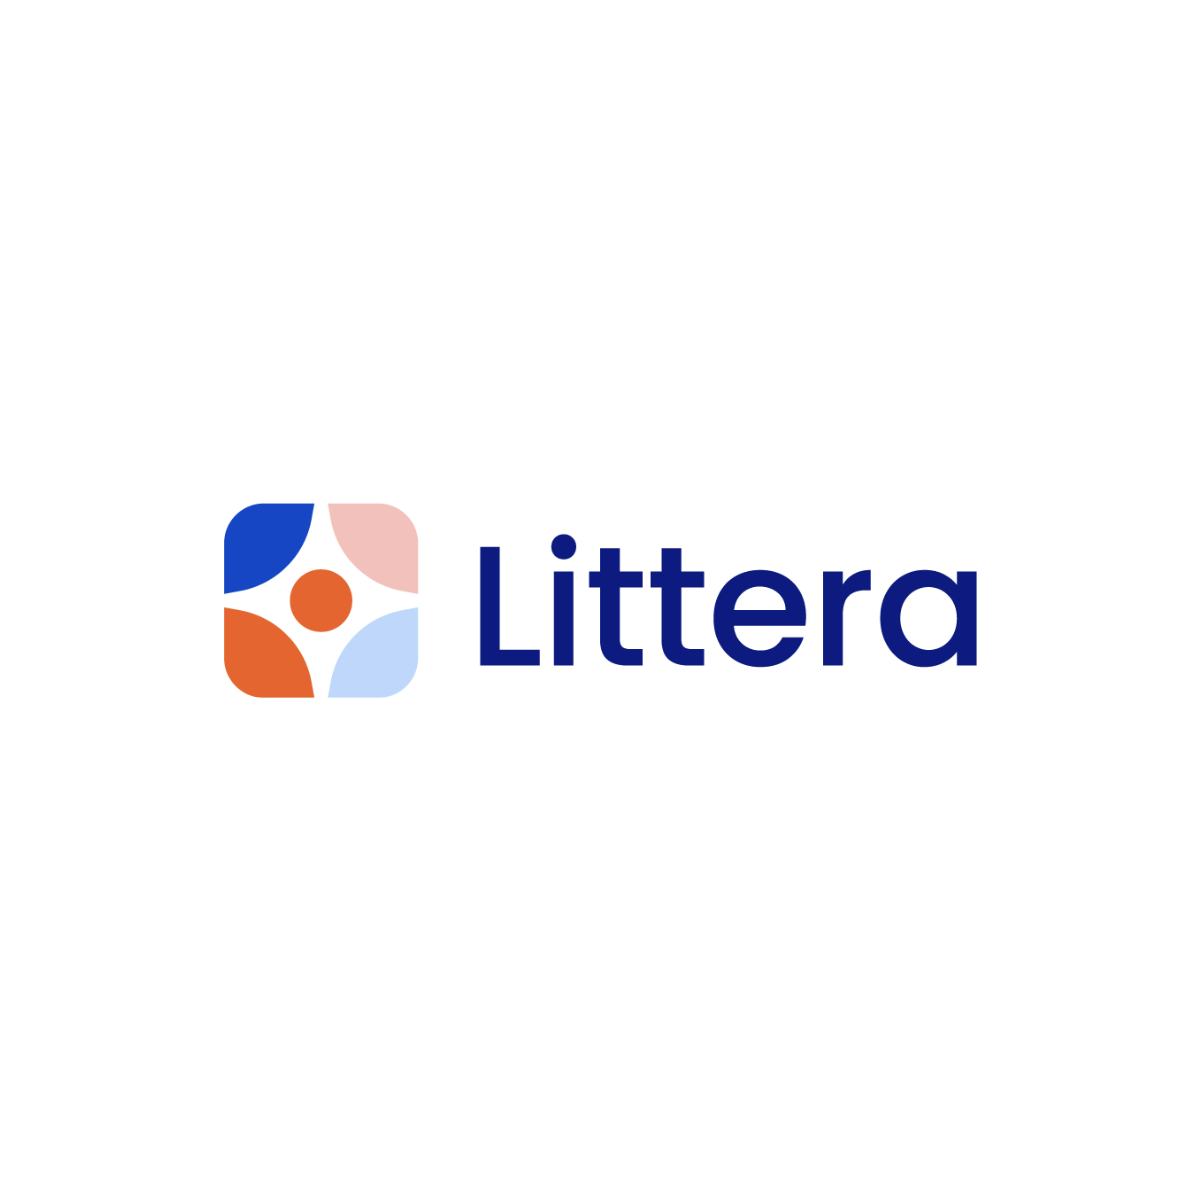 Image of the Littera logo